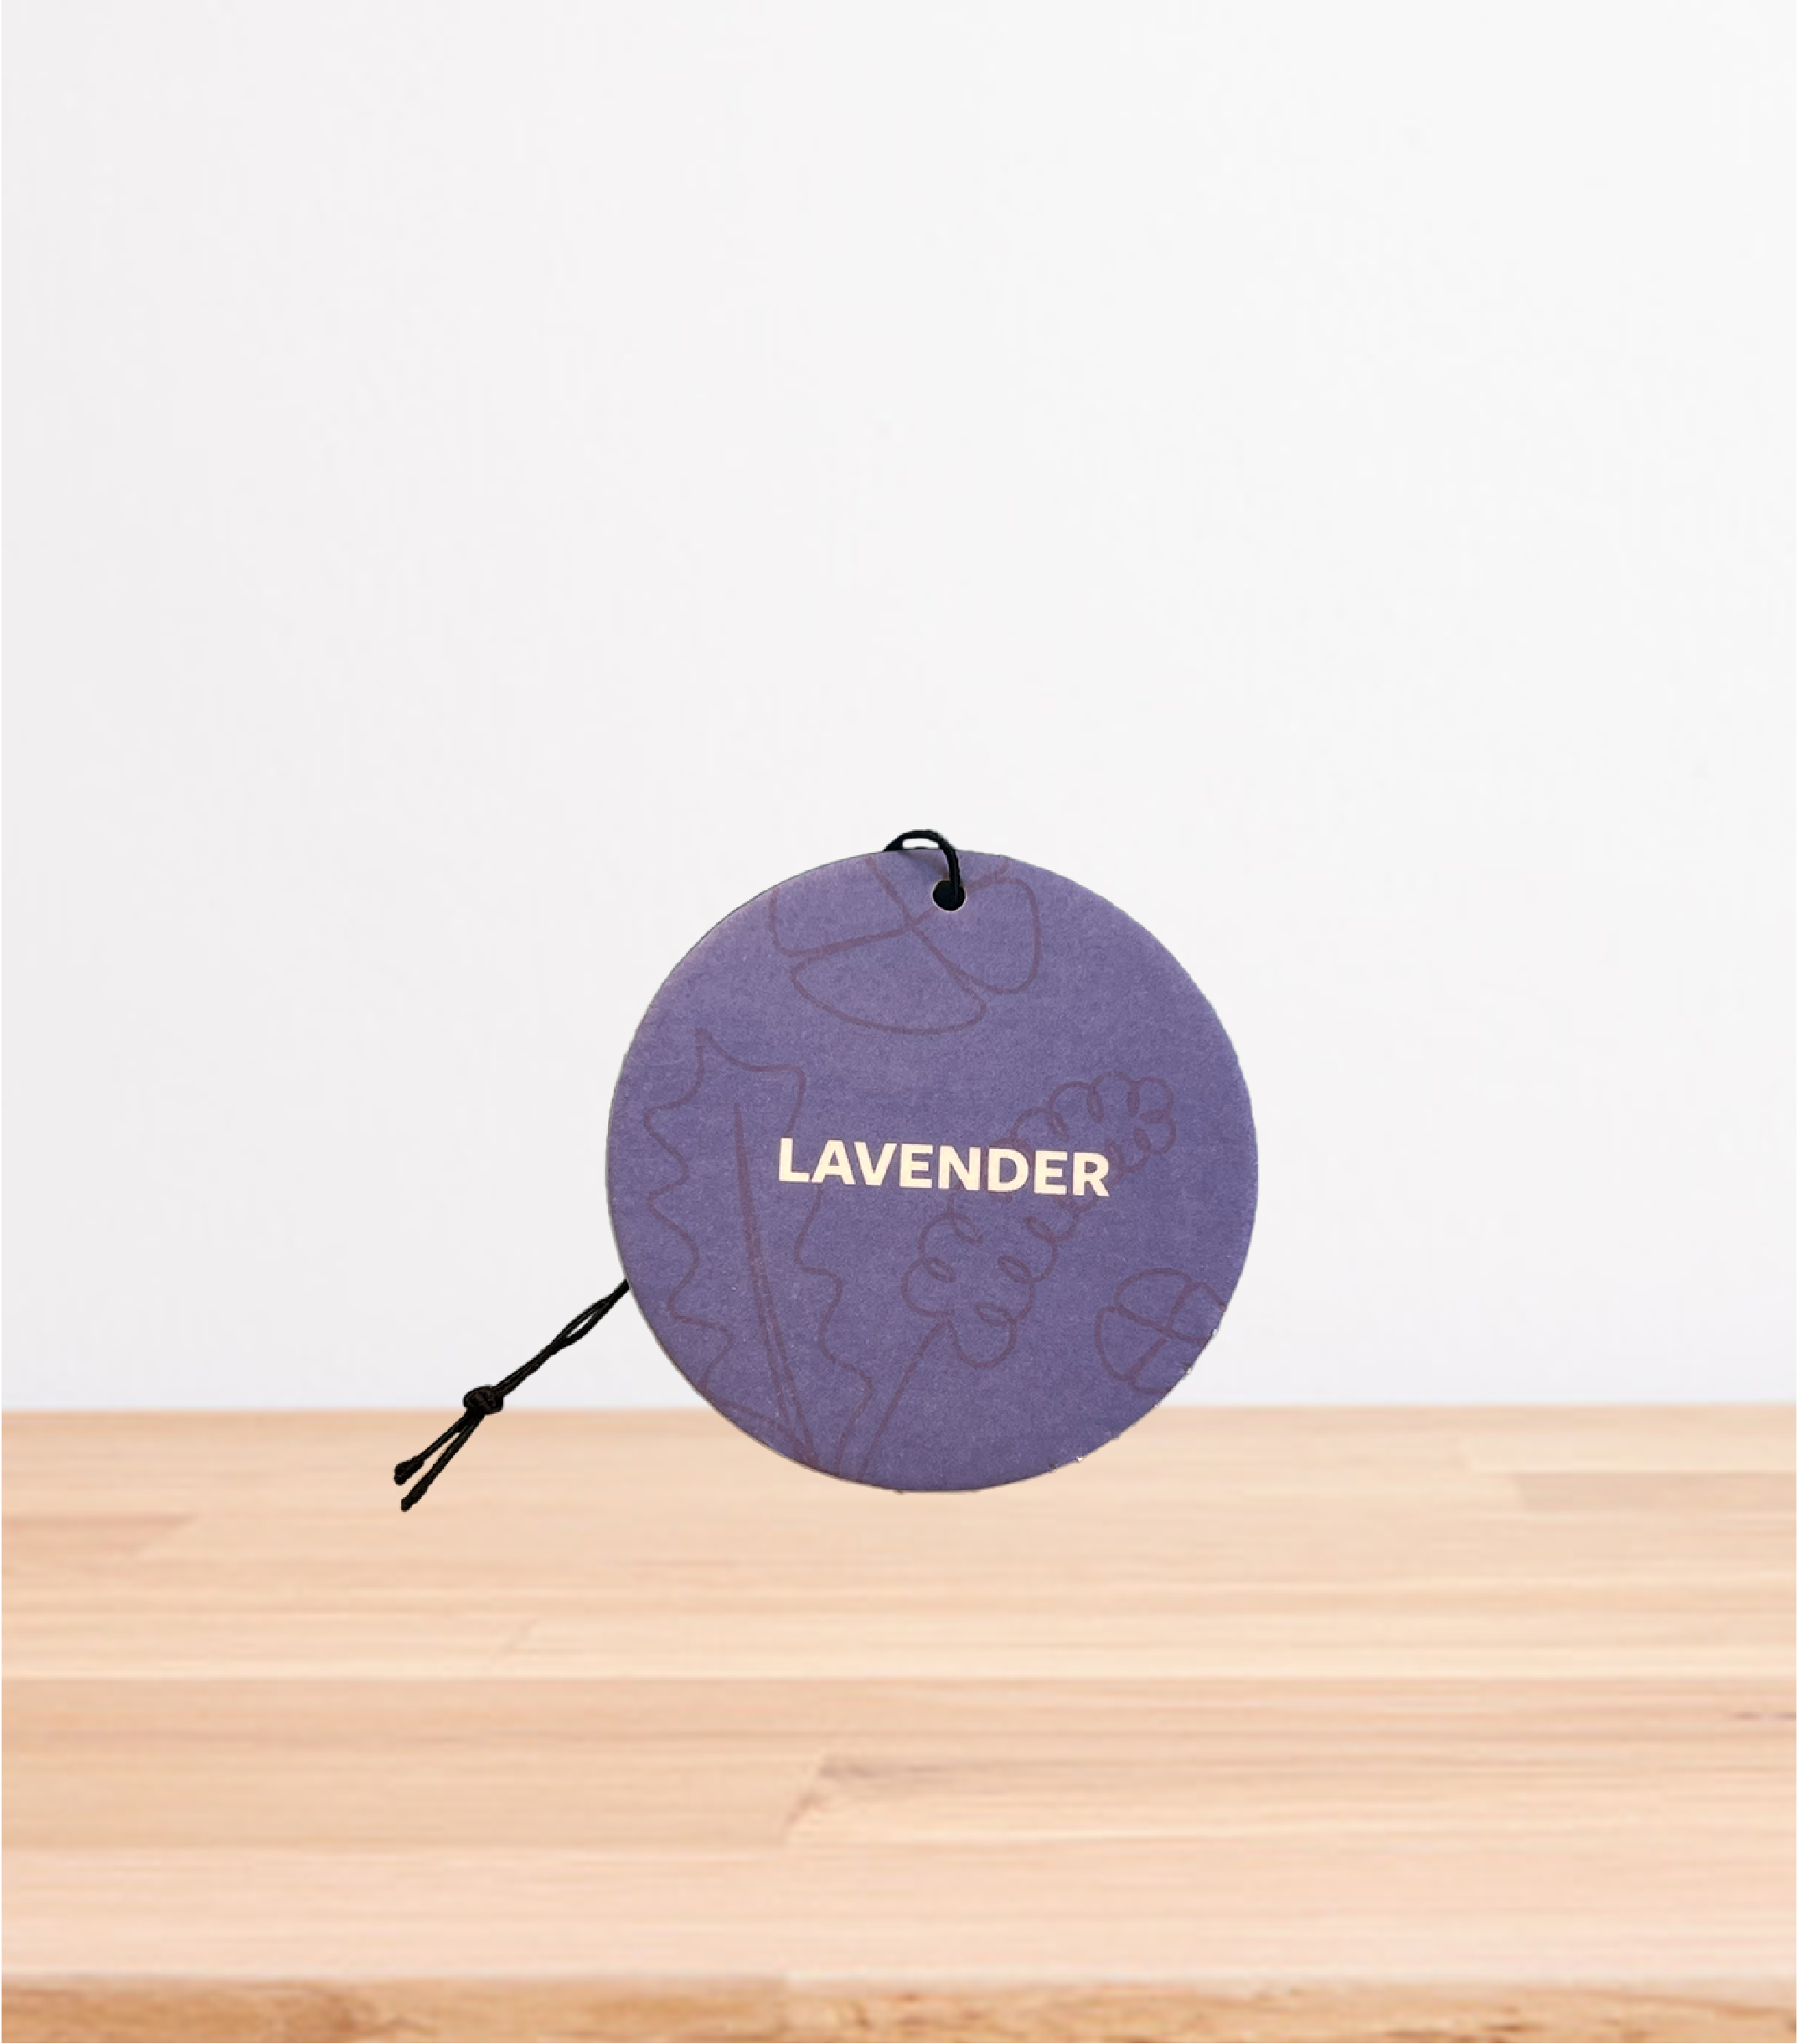 Lavender Car Freshener